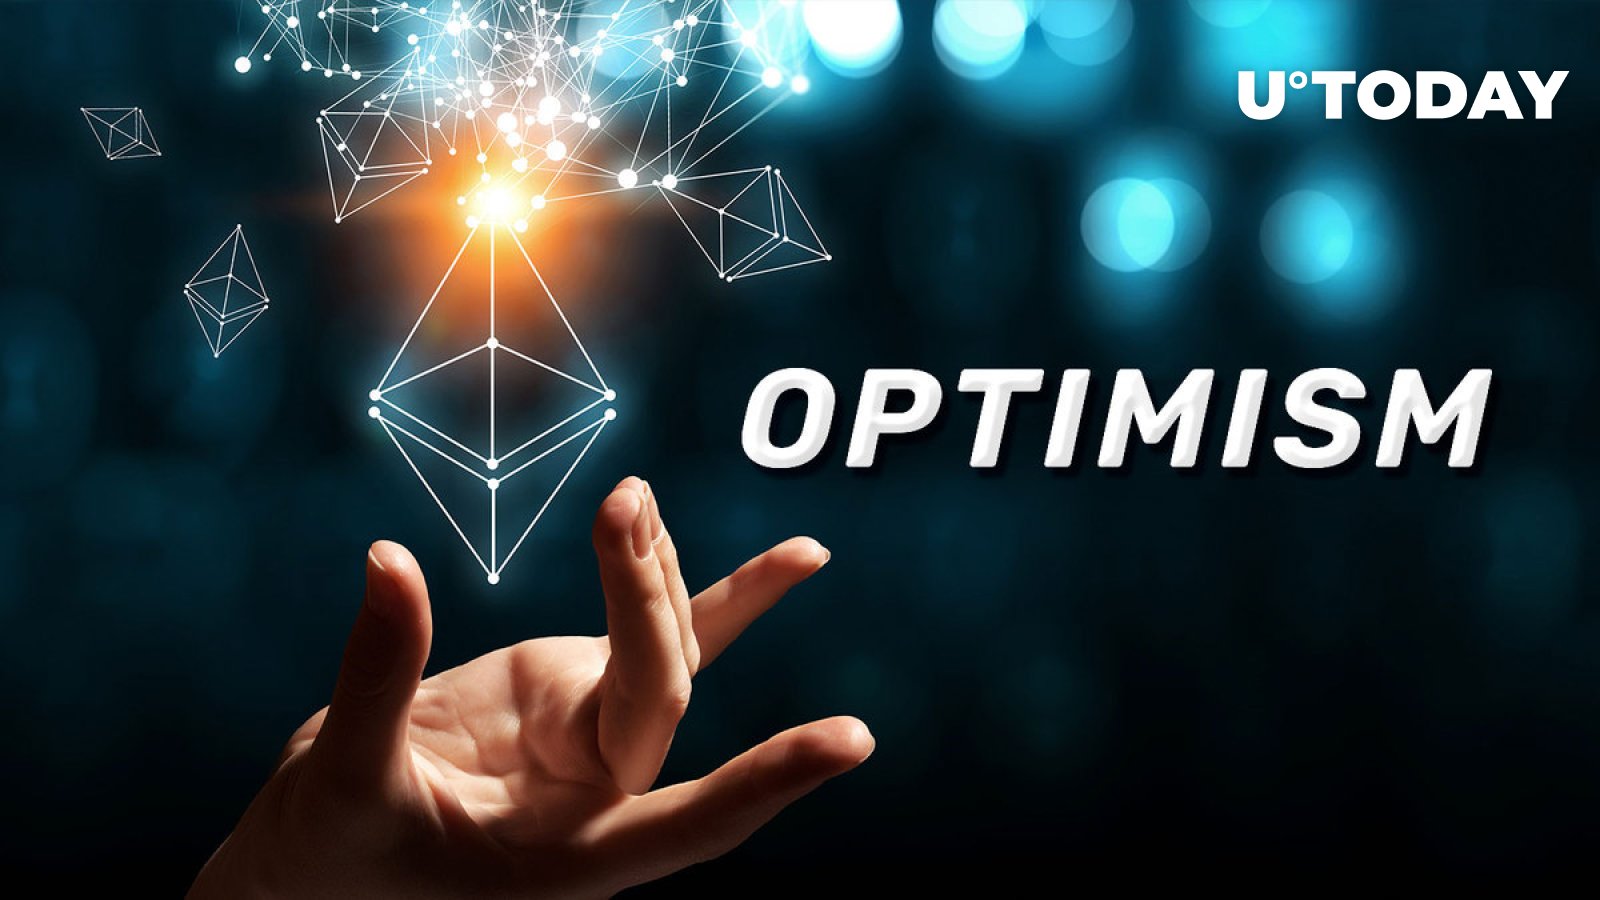 Optimism Ethereum Deposits Are Skyrocketing, Showing 800% Growth